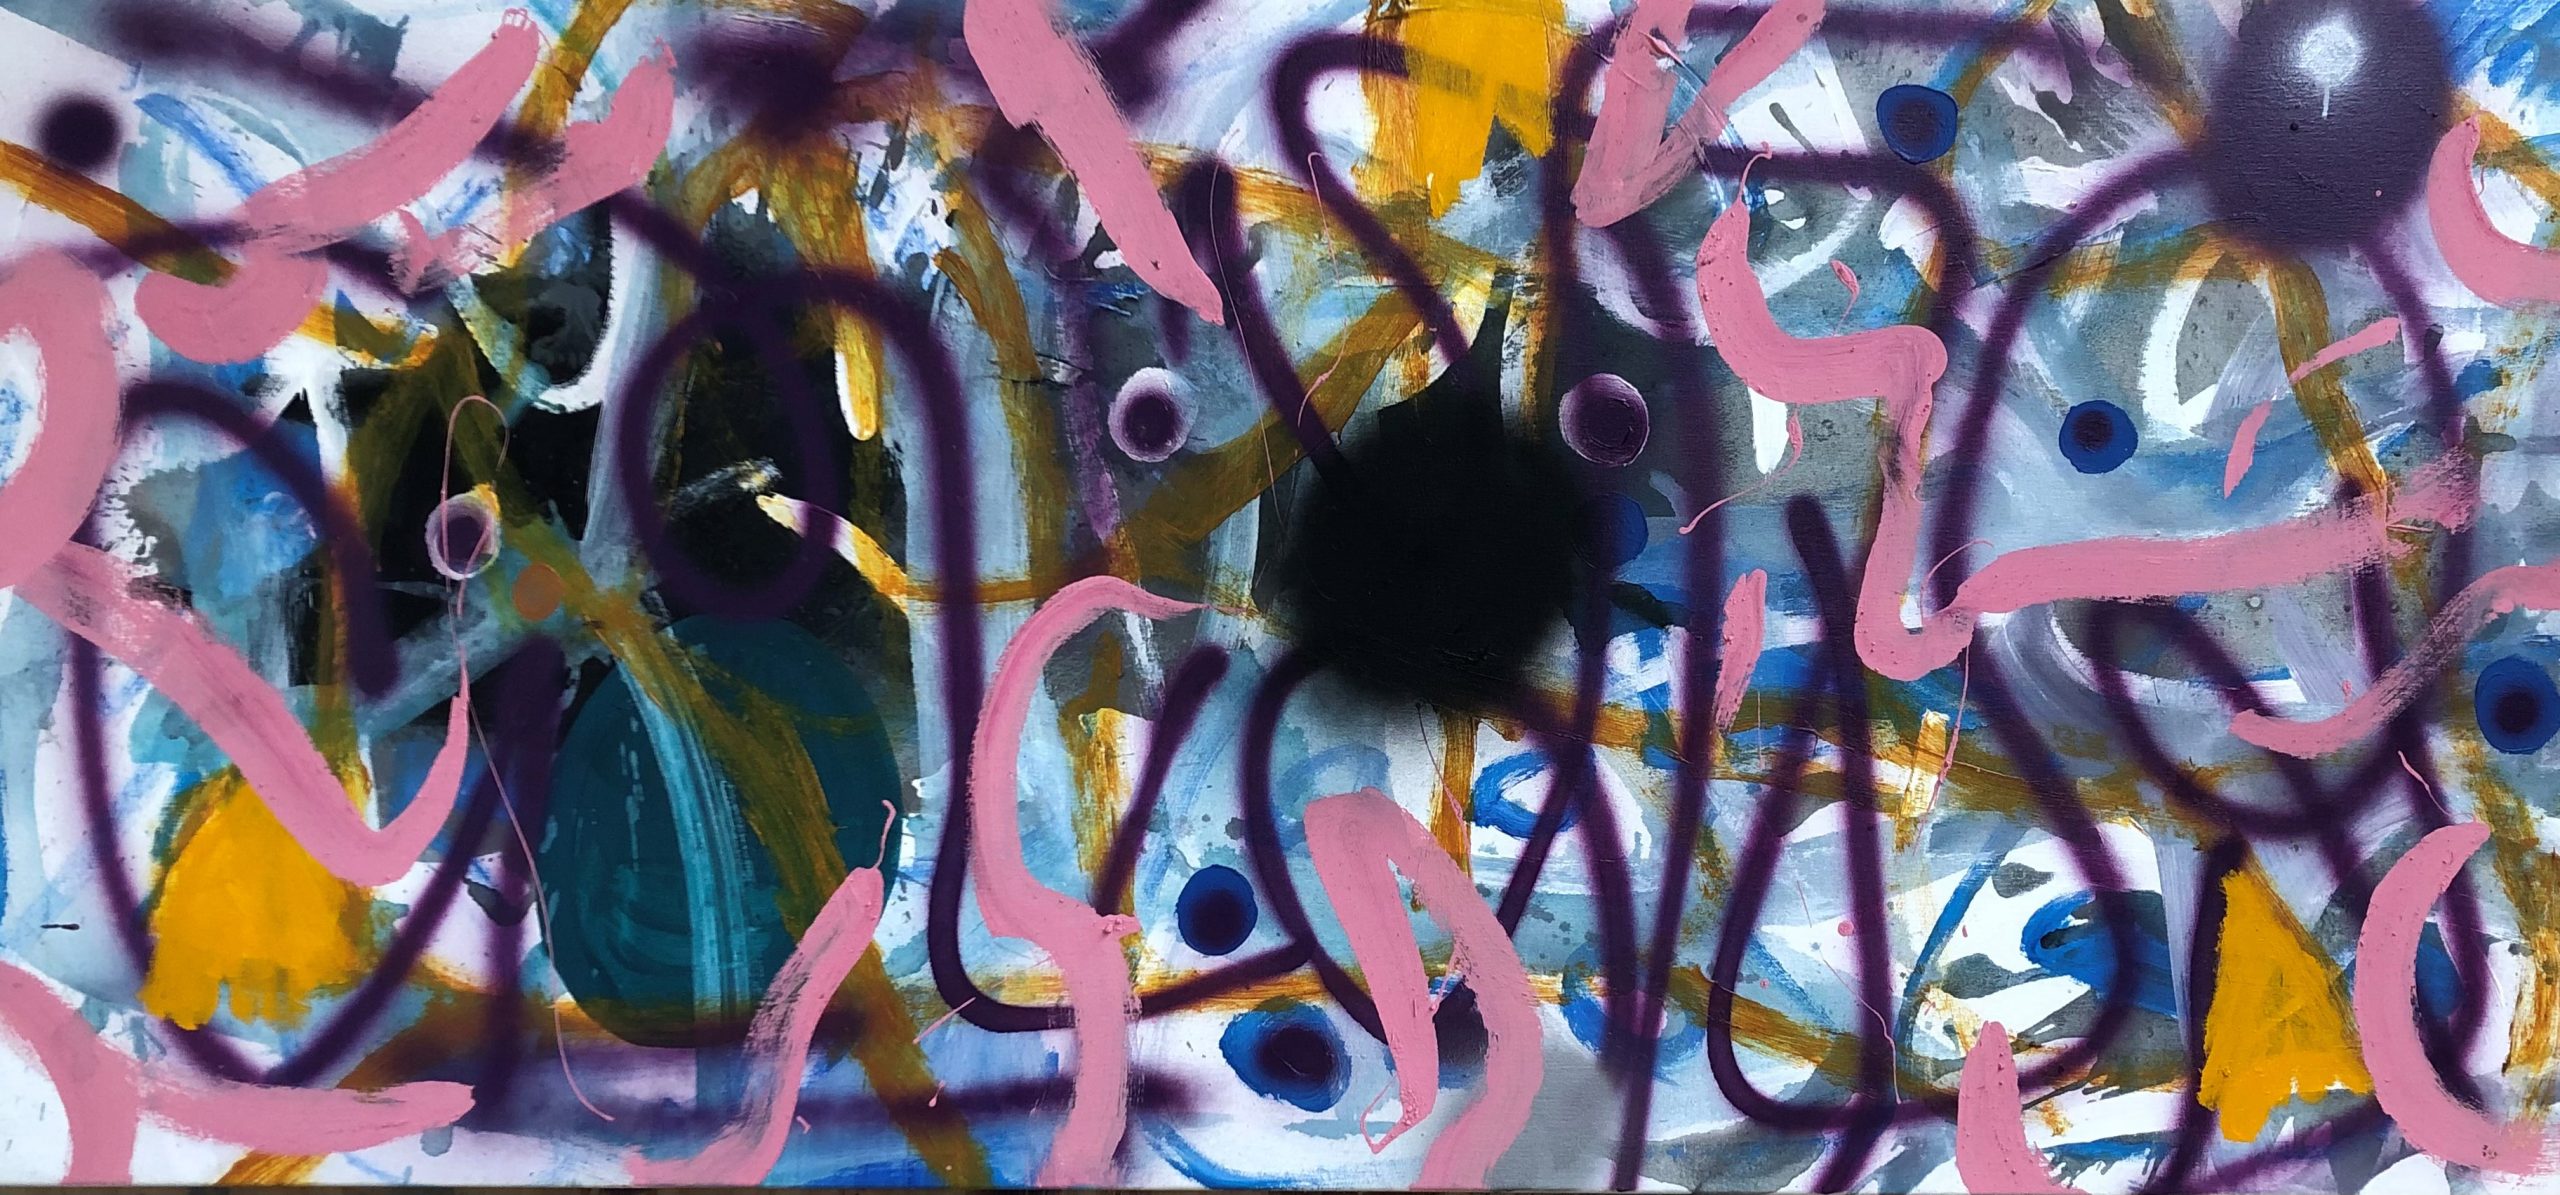 Al Poulet 'The Spot' acrylic on spray paint on canvas 80 x 180cm